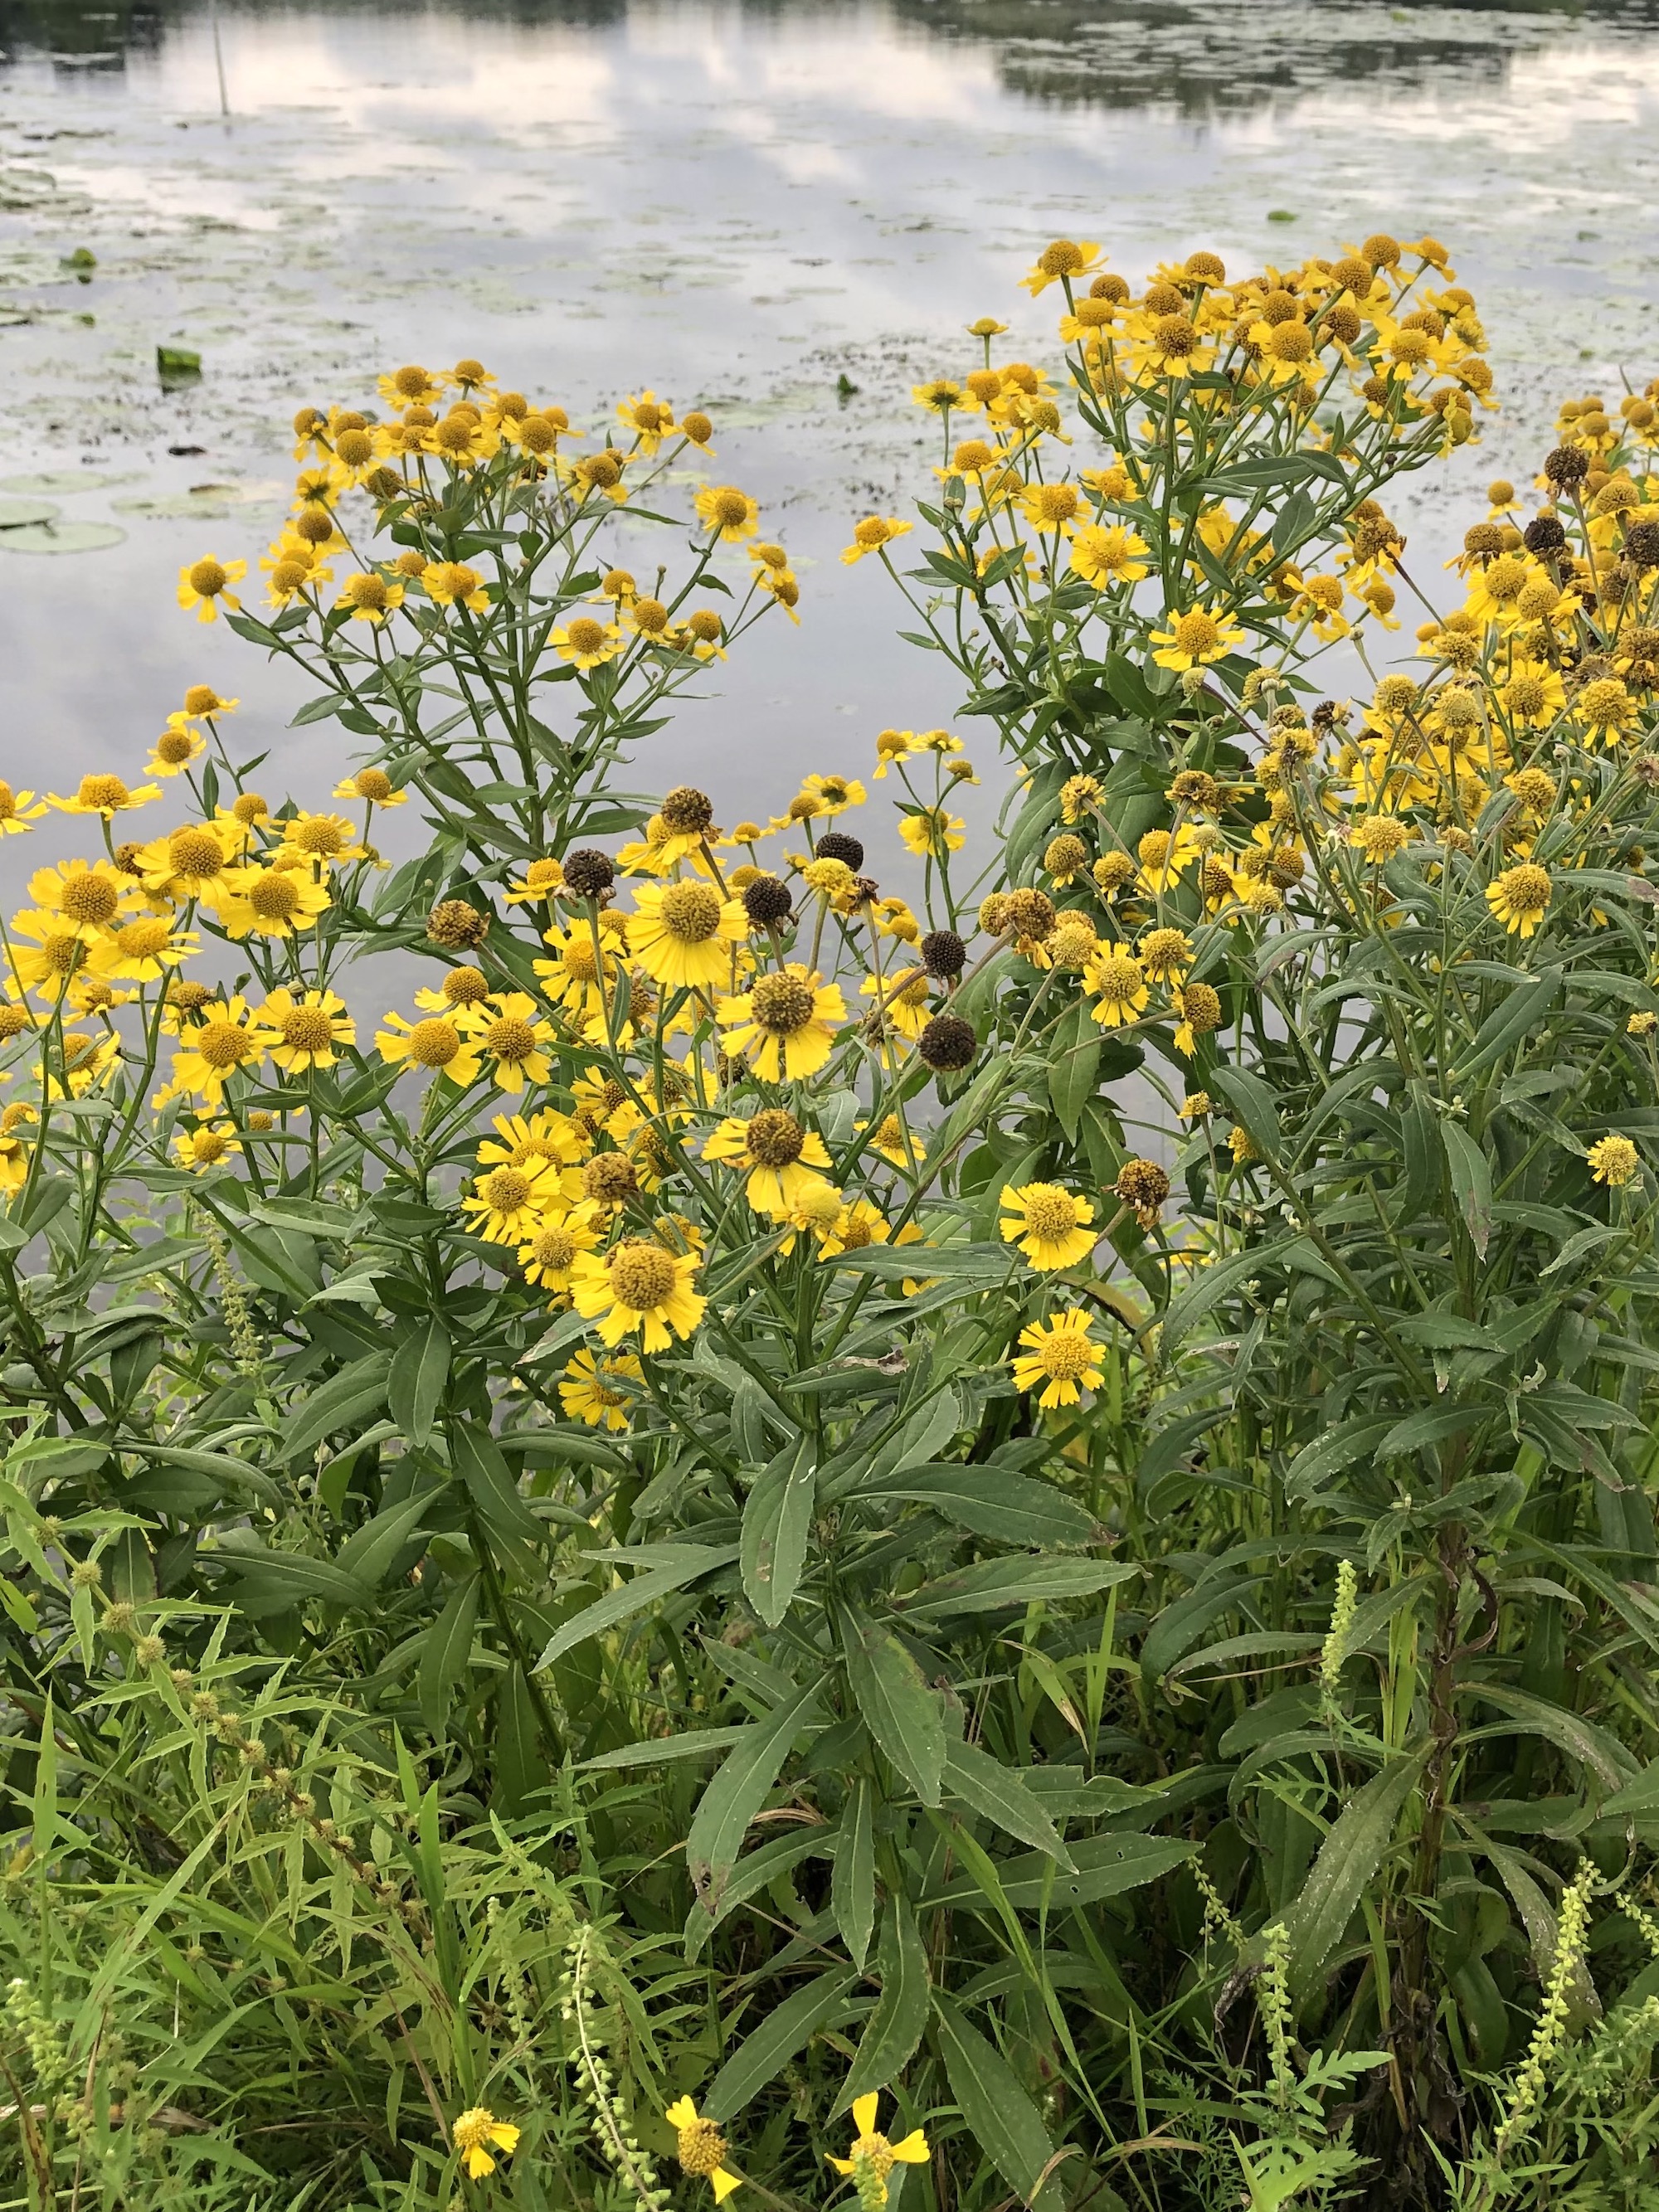 Common Sneezeweed around Vilas Park lagoon in Madison, Wisconsin on September 4, 2021.